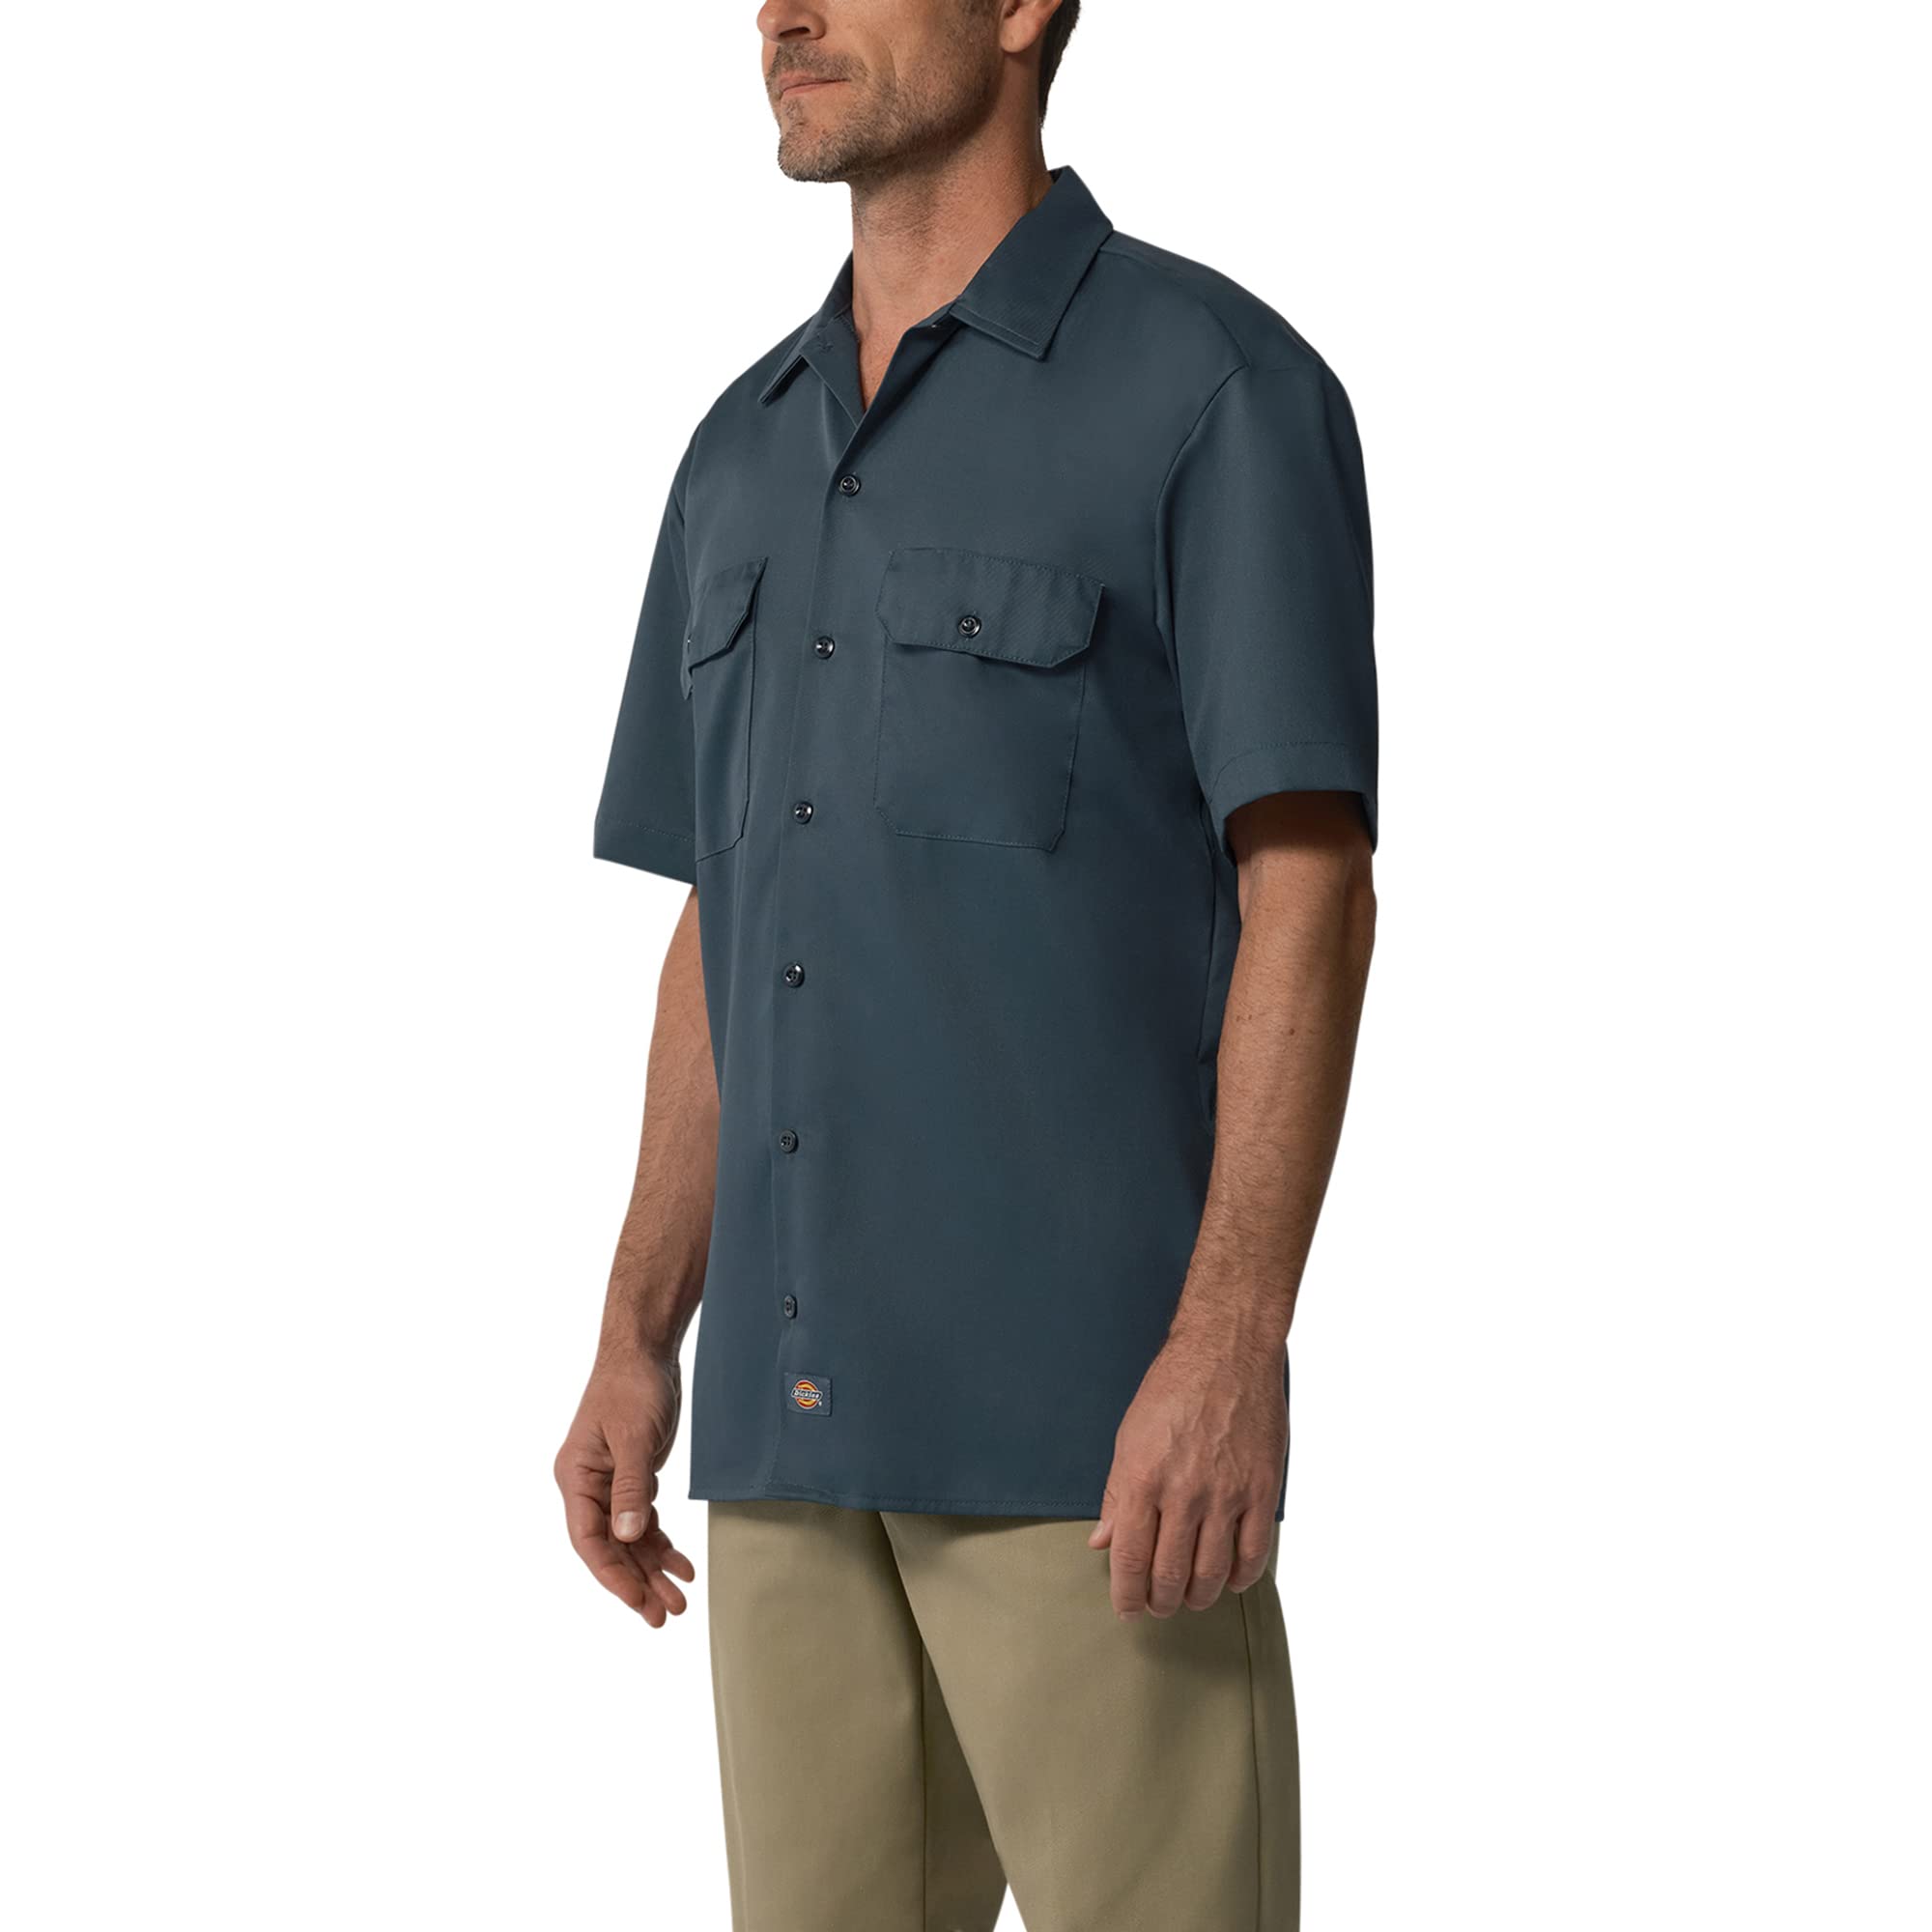 Dickies Men's Big and Tall Short-Sleeve Work Shirt